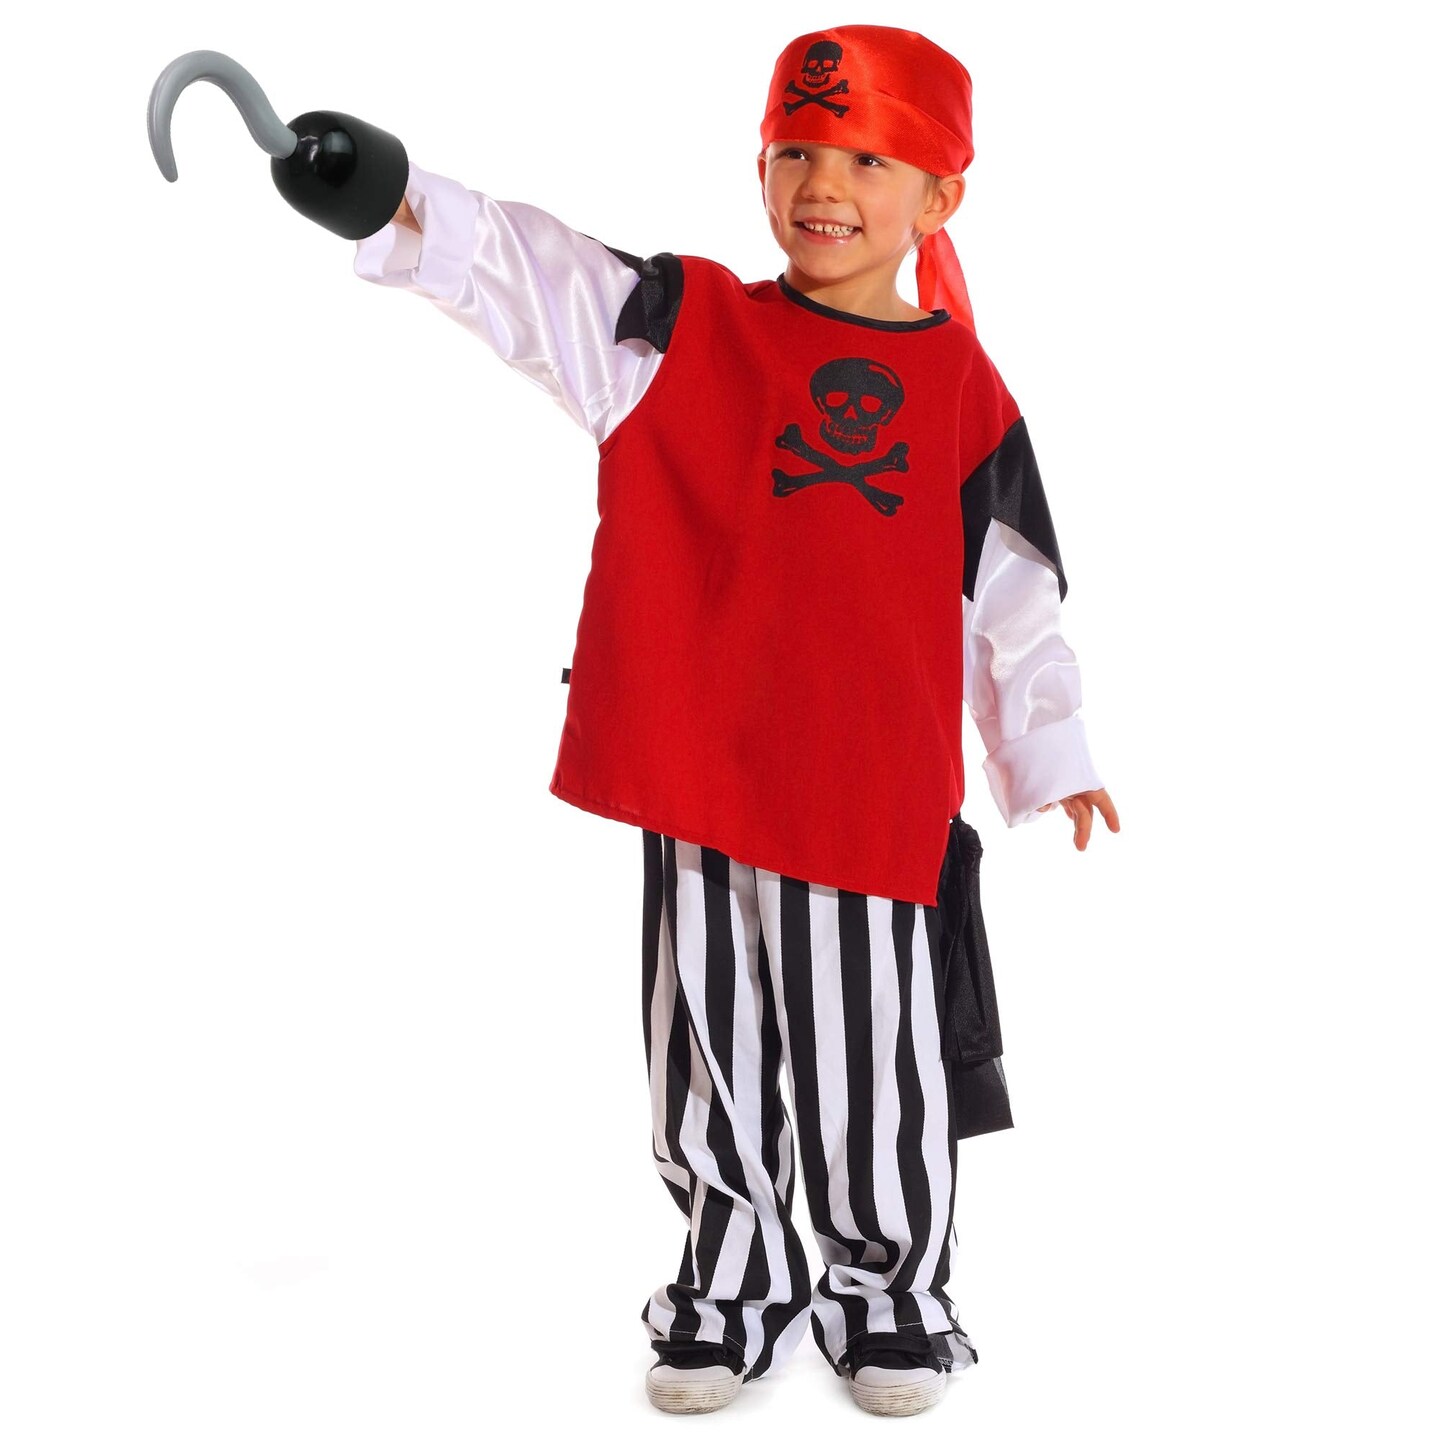 Captain Hook Costume Accessories - Plastic Hook Pirate Costume